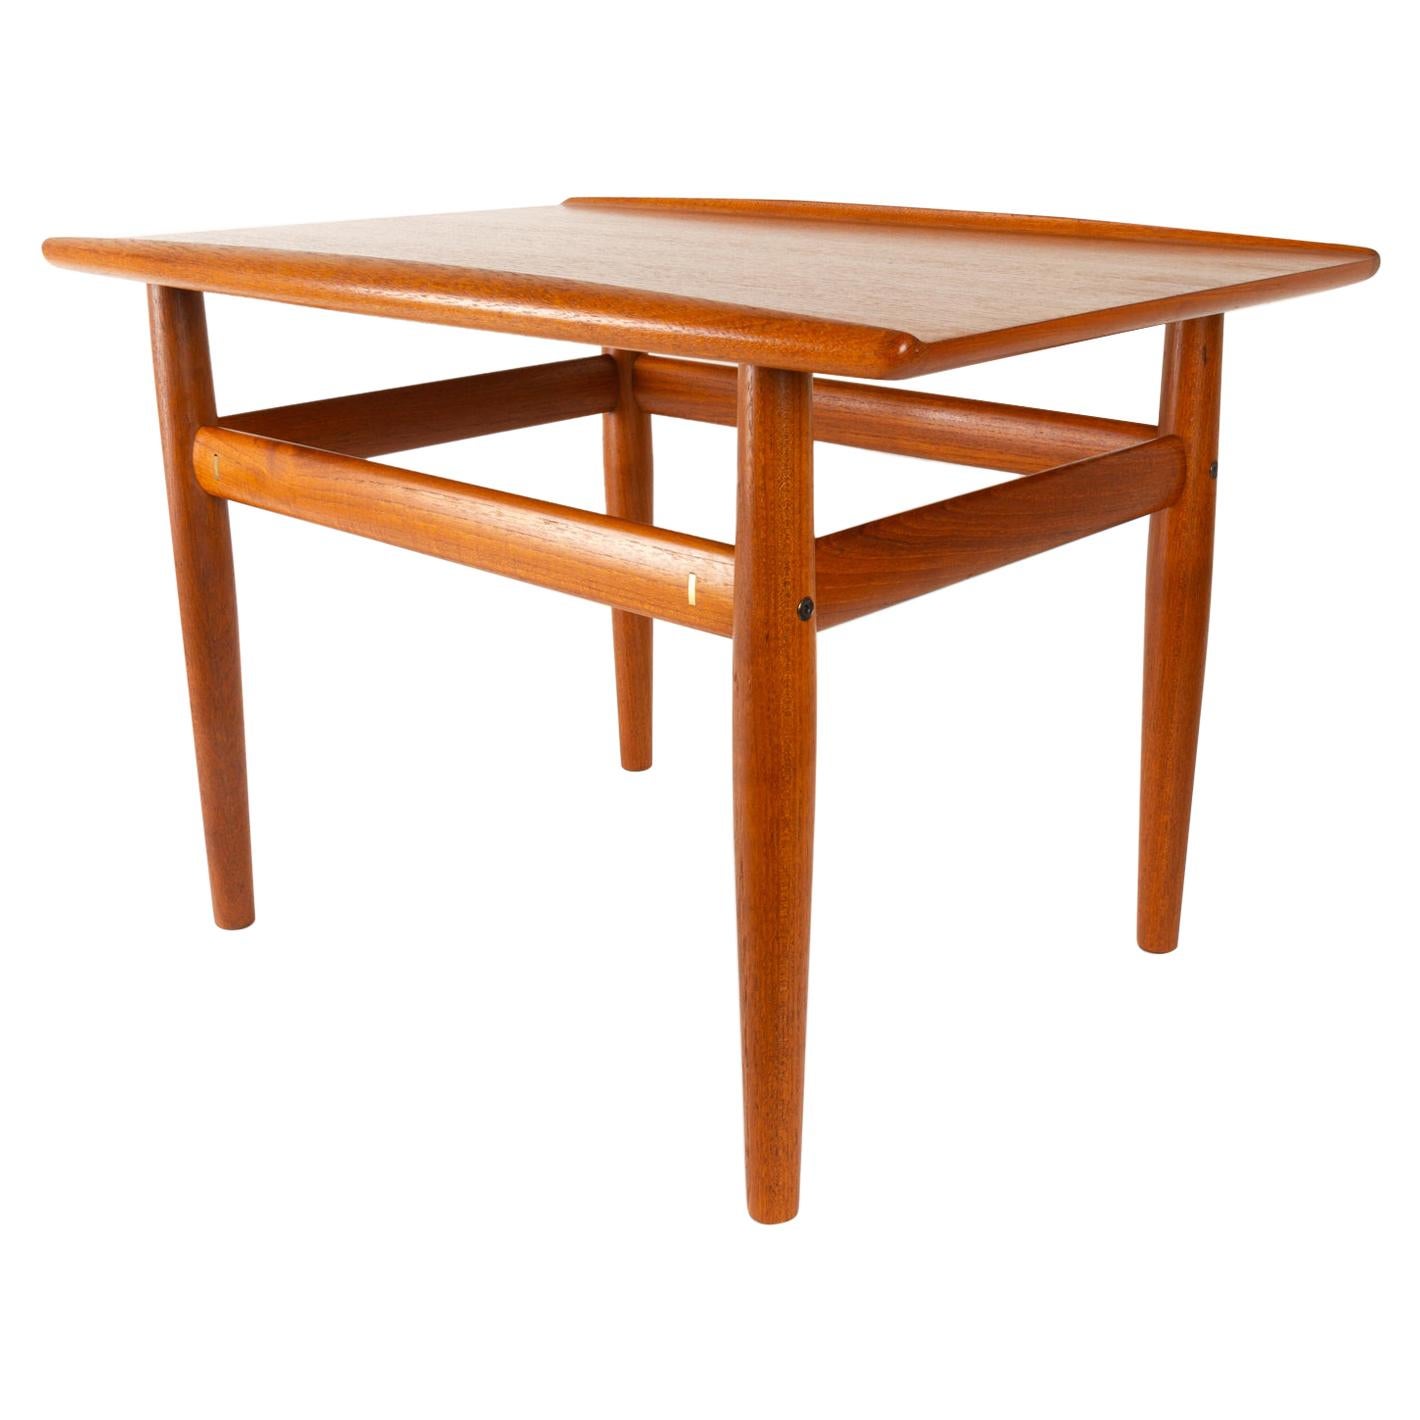 Danish Modern Teak Side Table by Grete Jalk for Glostrup Møbelfabrik, 1960s